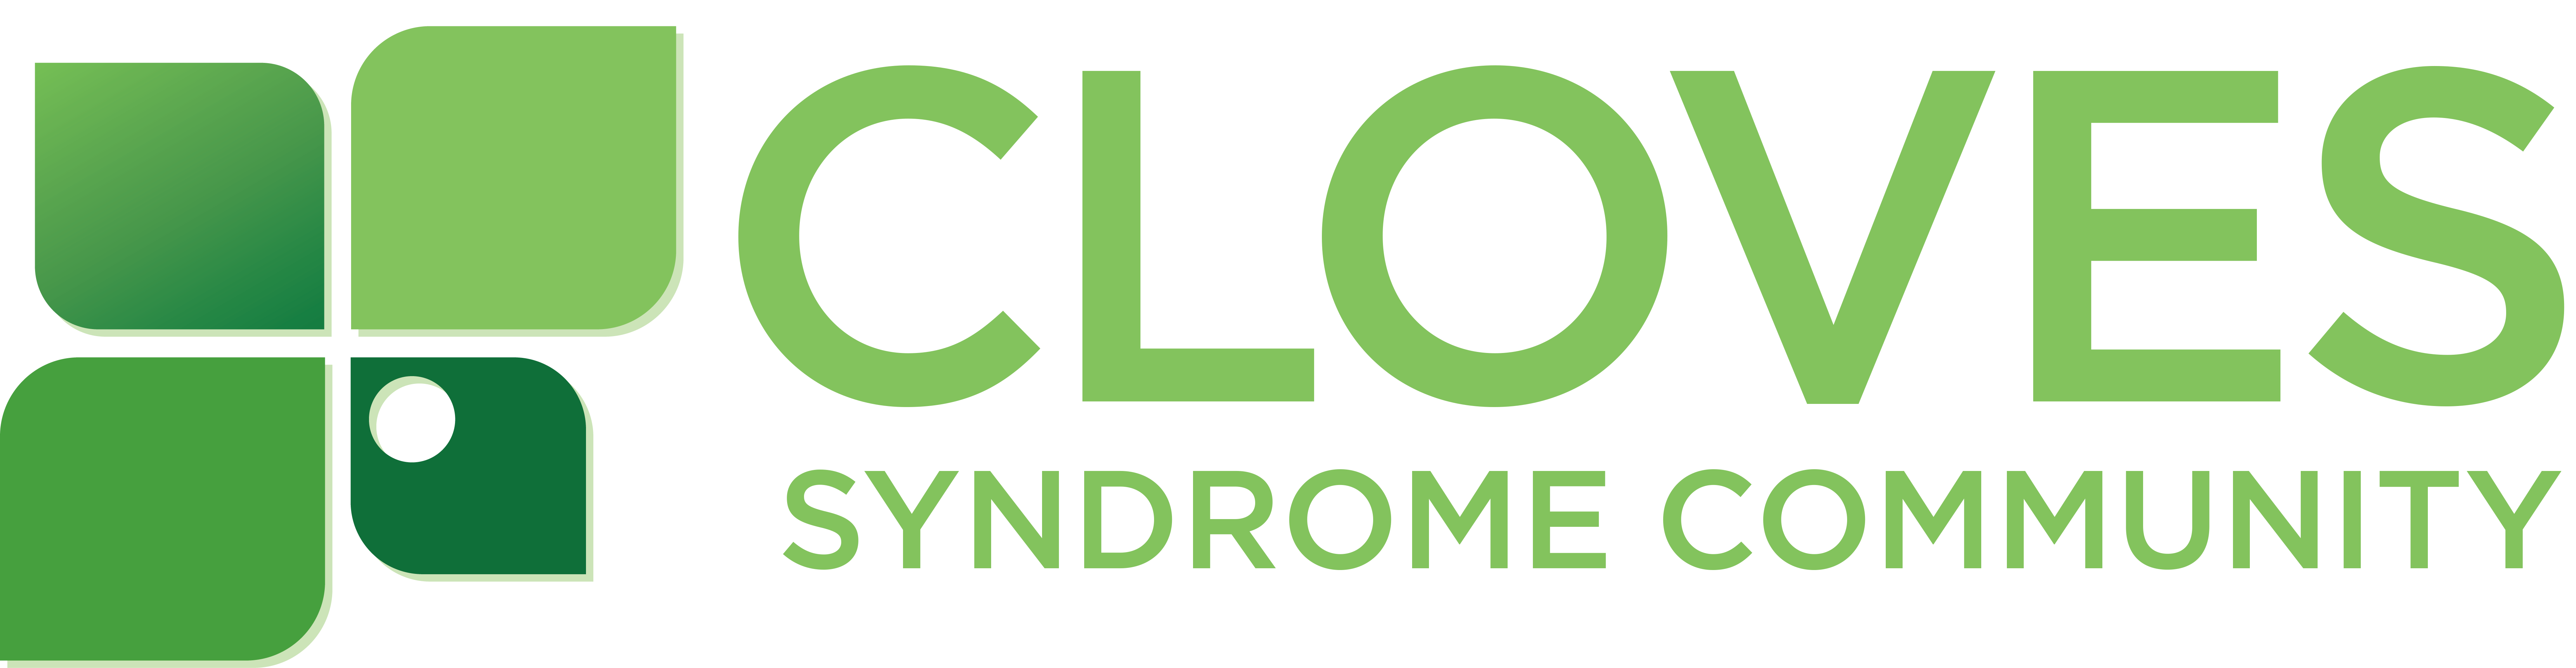 CLOVES Syndrome Community logo